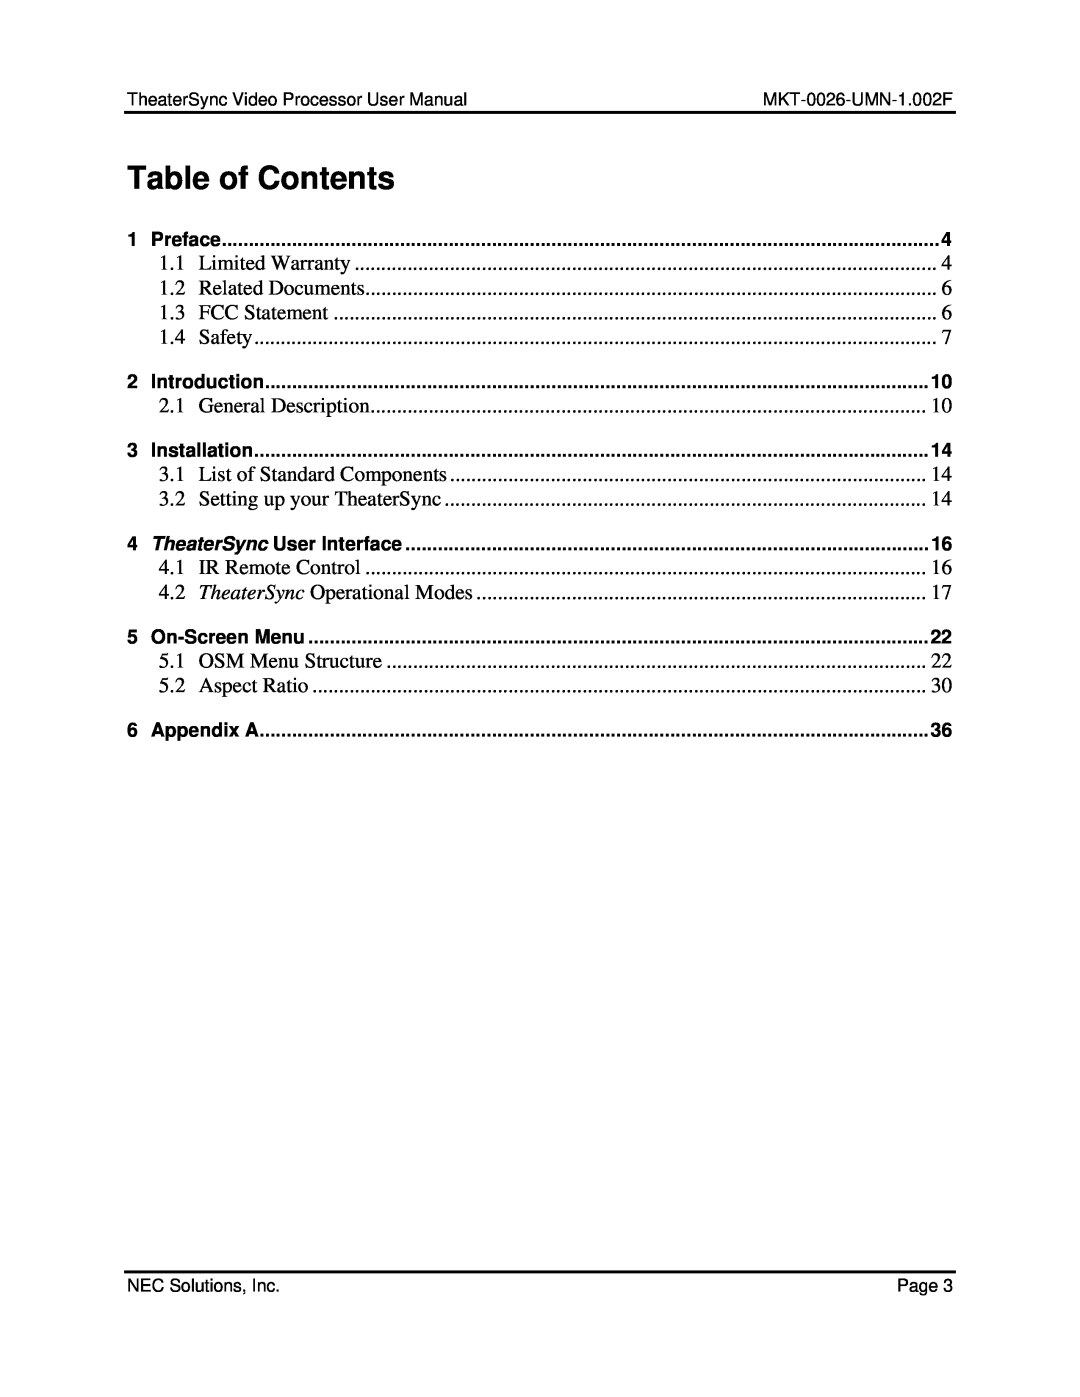 NEC TheaterSync Video Processor user manual Table of Contents 